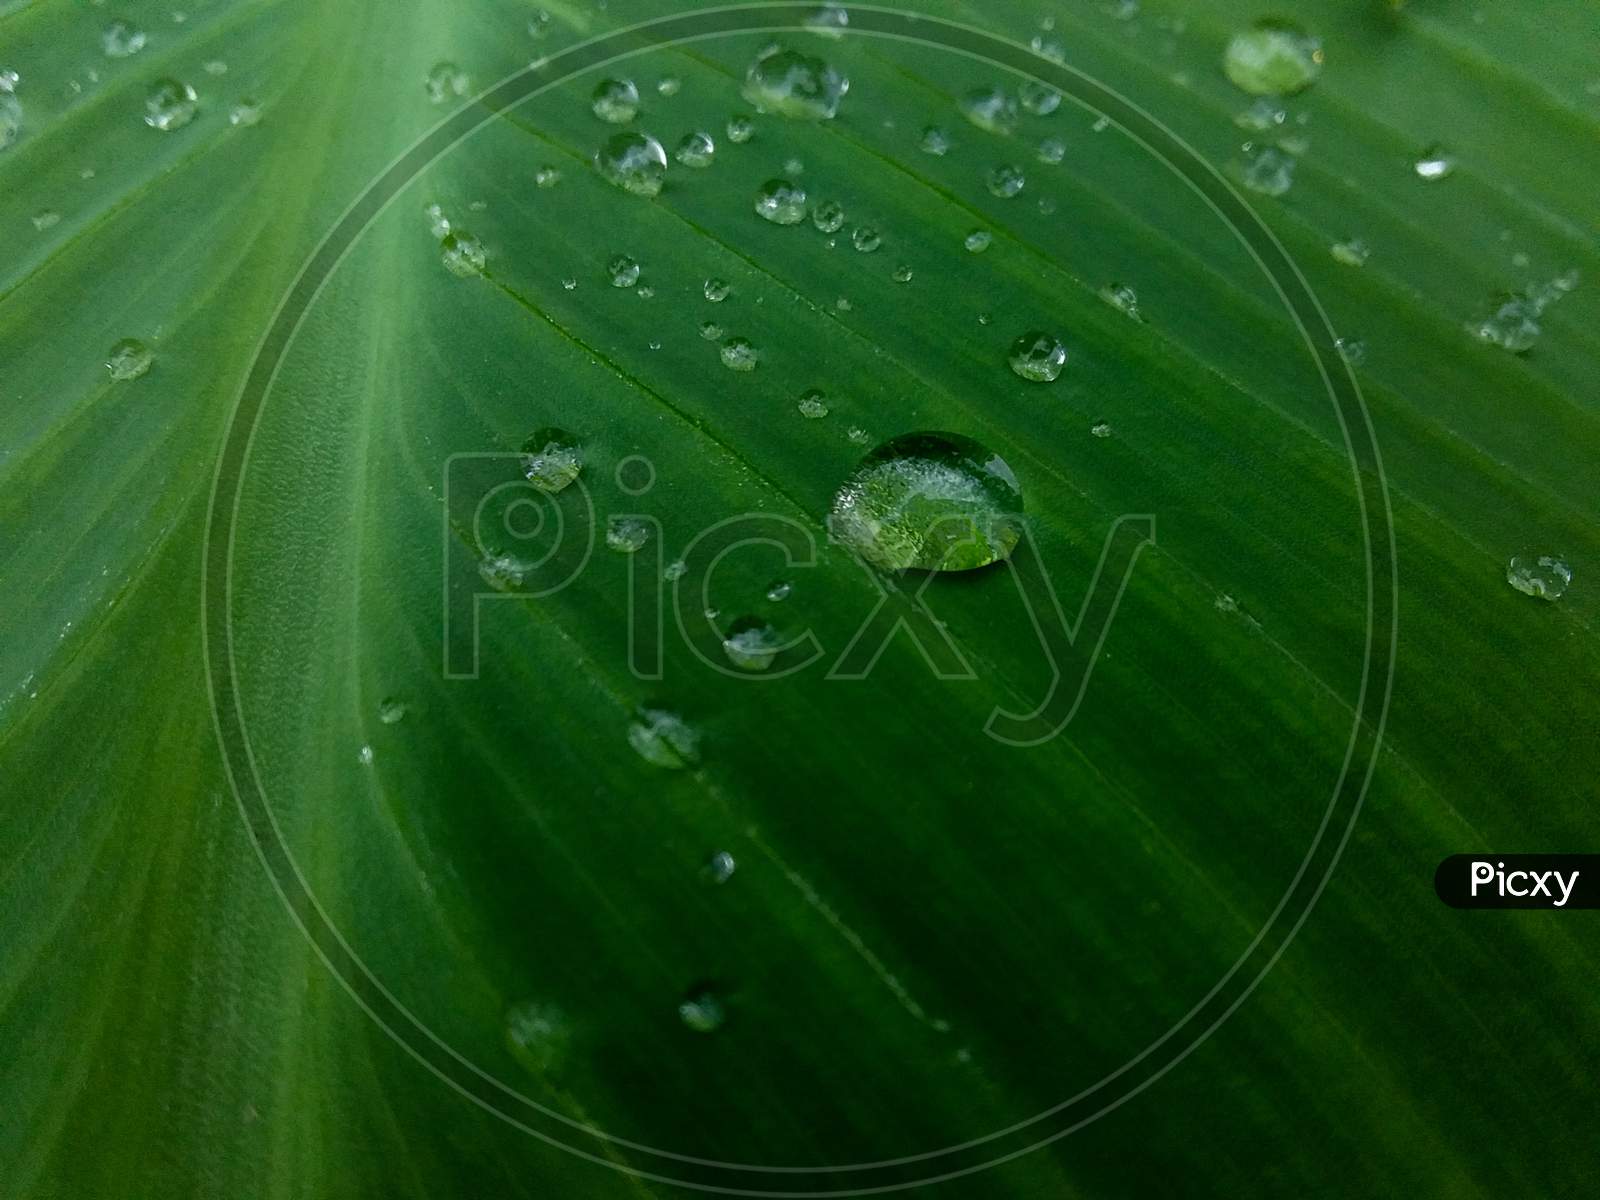 green leaf with water drops, Banana leaf